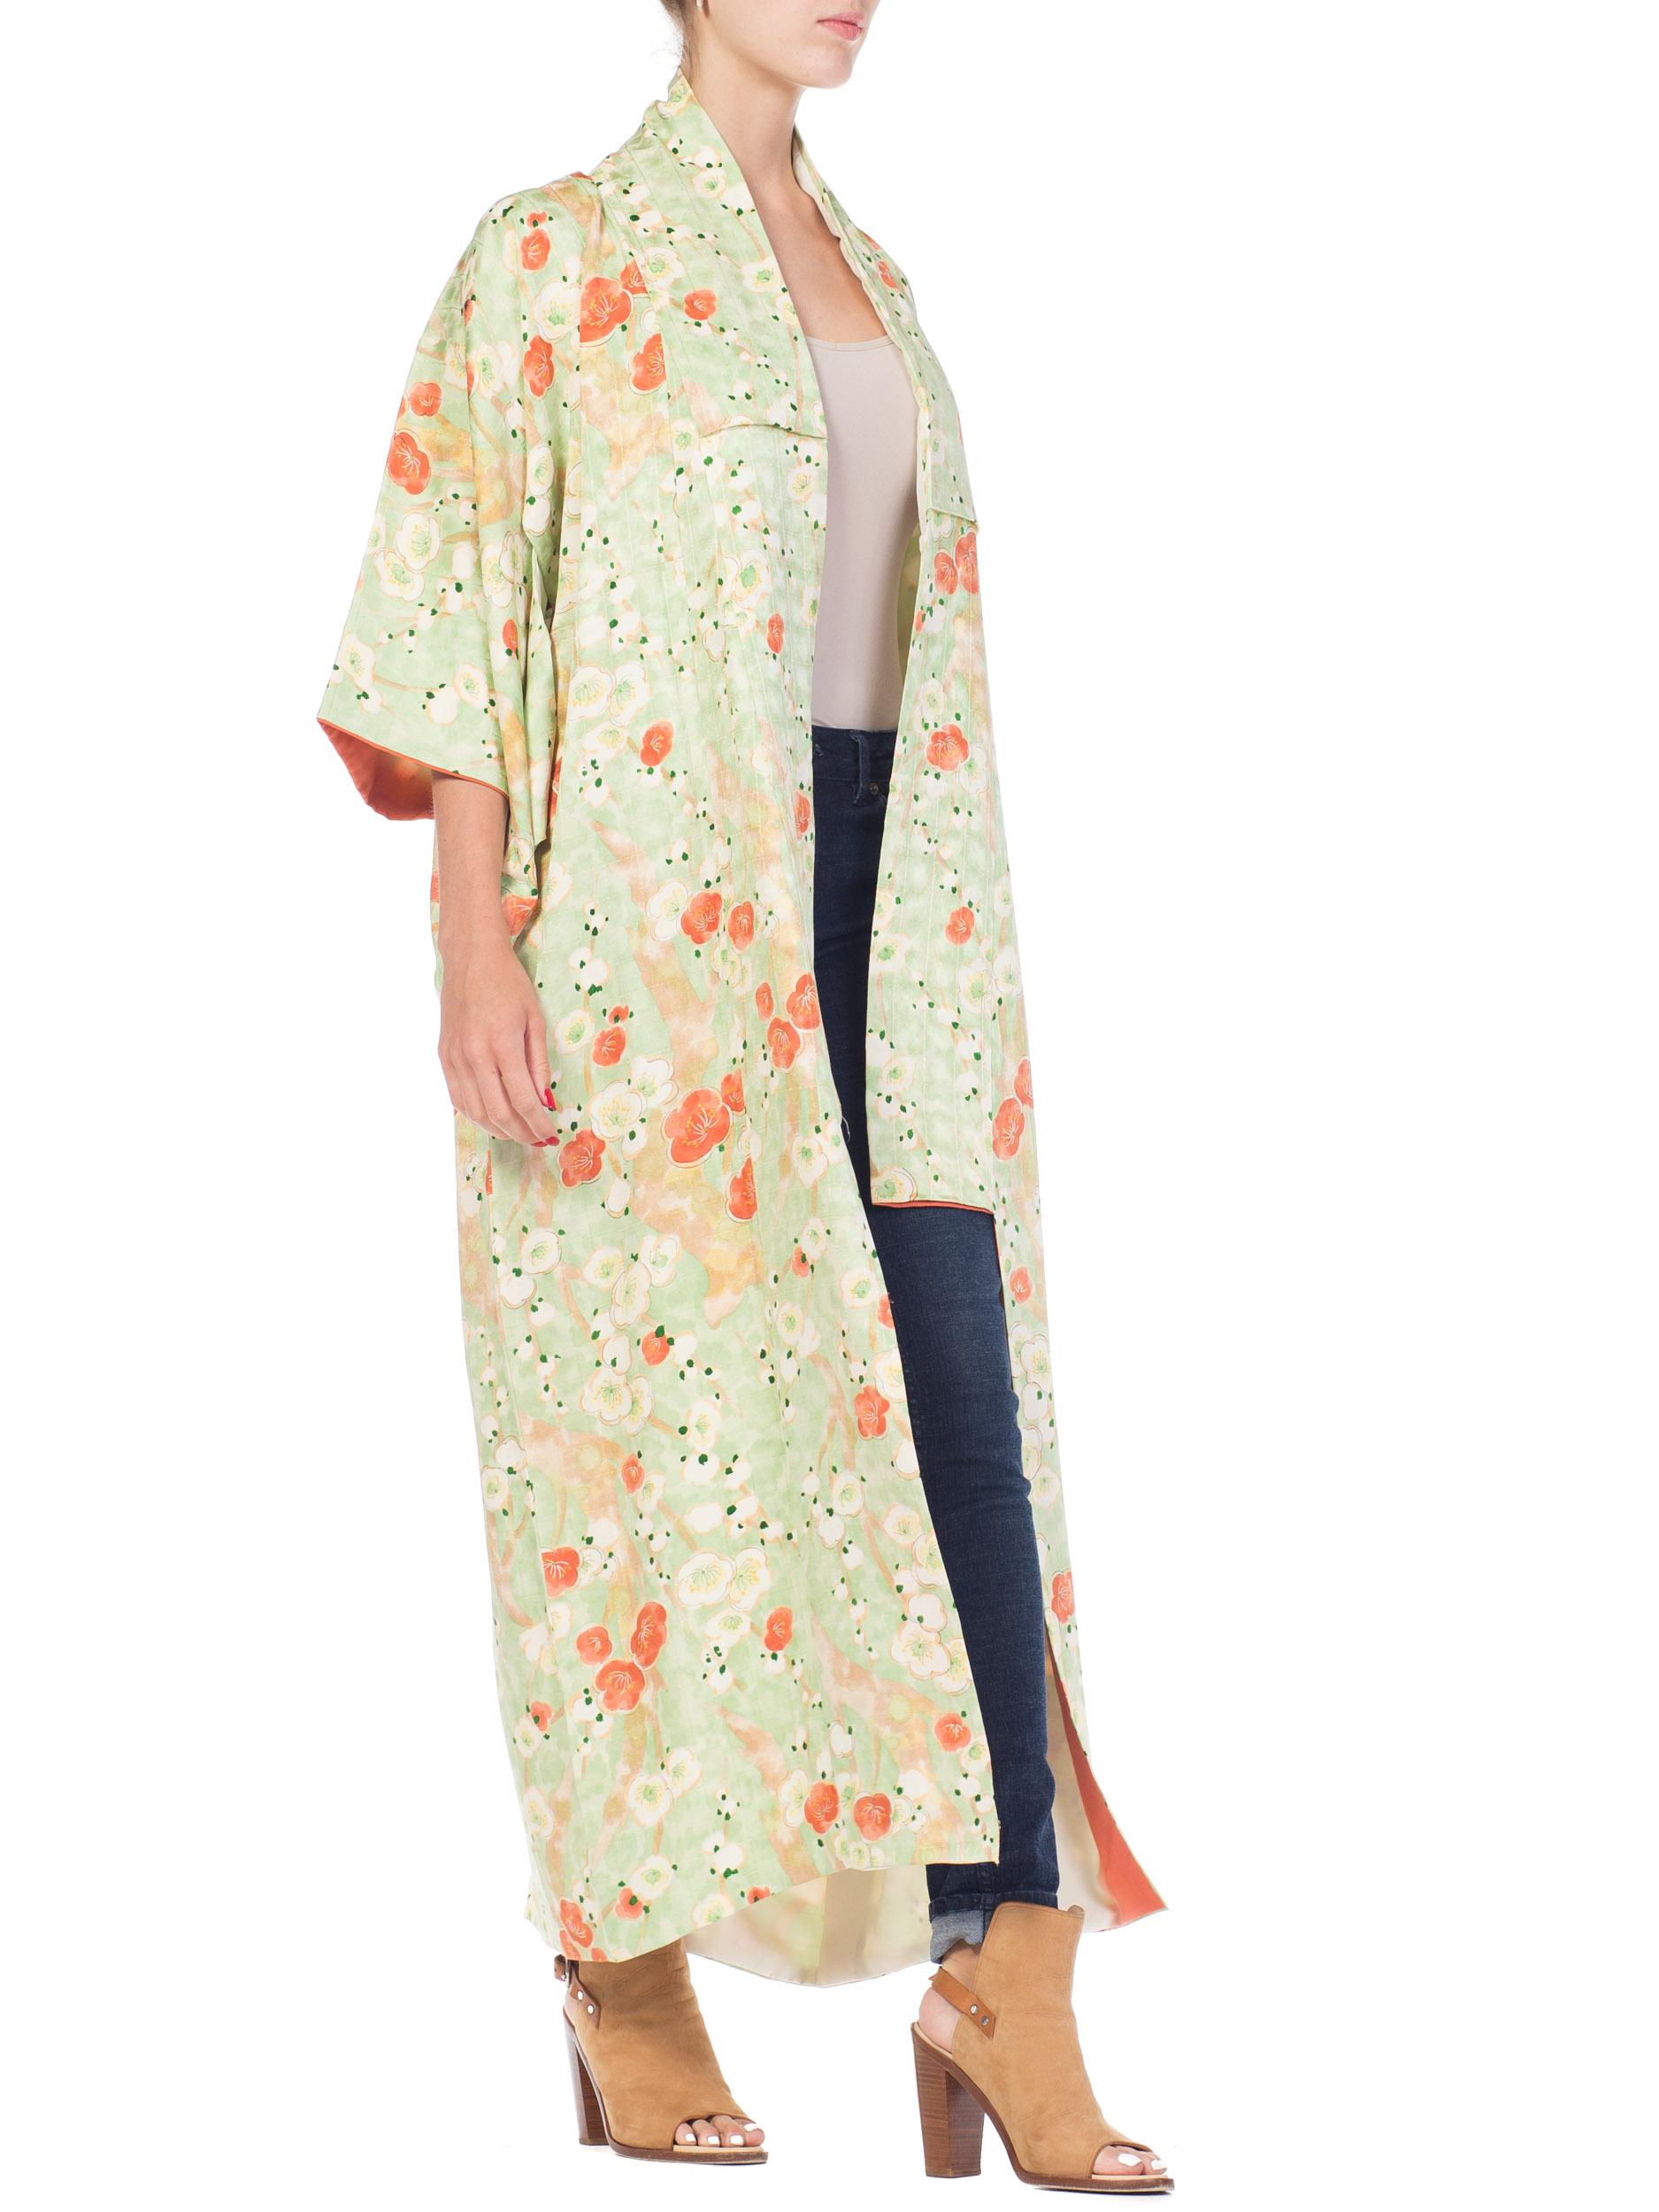 Women's Hand Made Japanese Cherry Blossom Silk Kimono